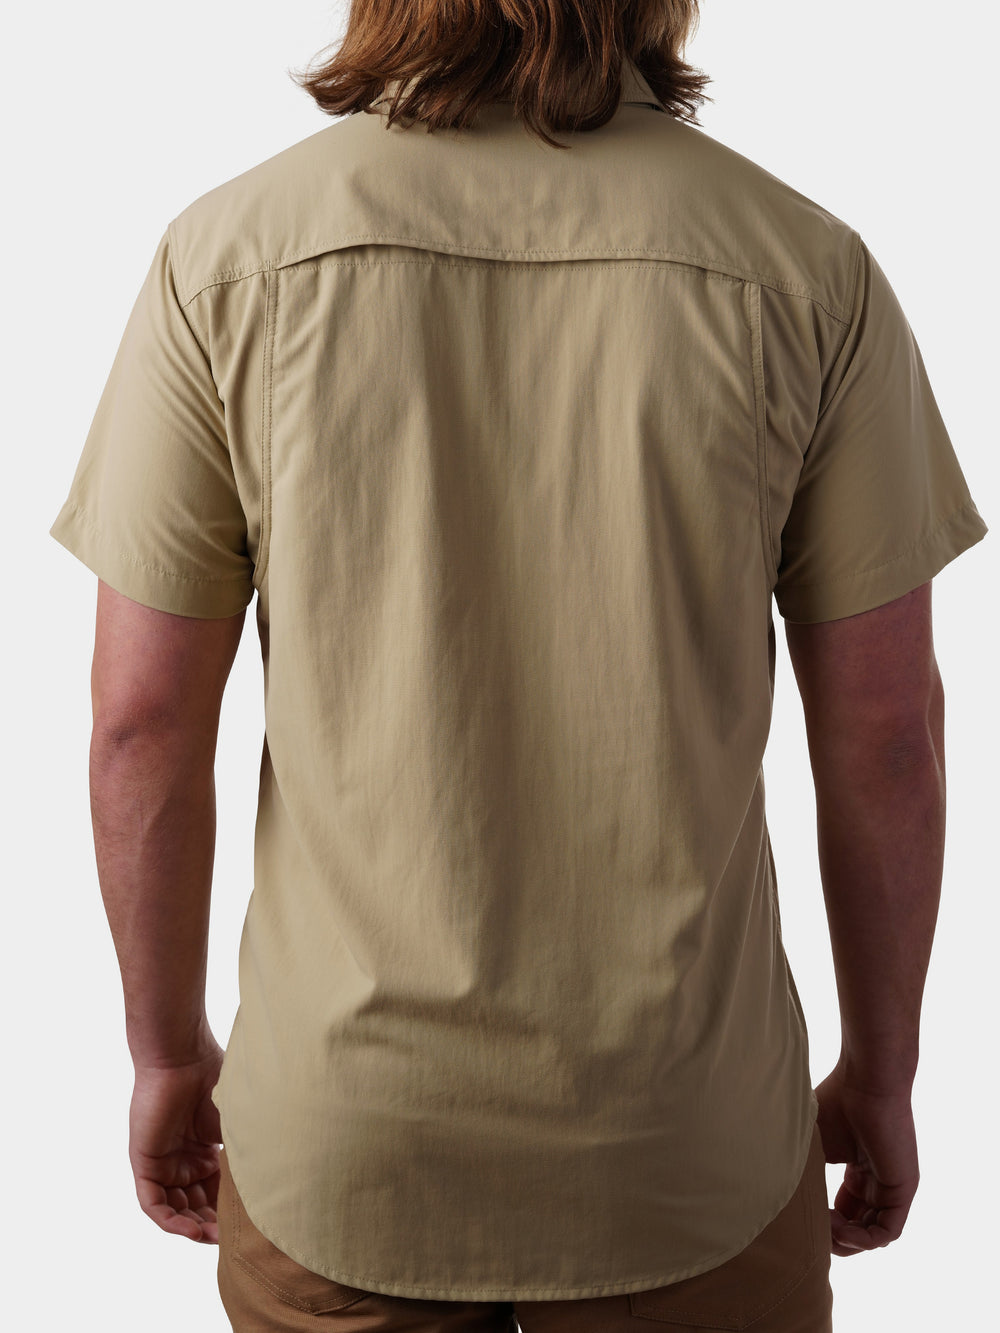 Men's Lightweight Hunting Shirt - Short Sleeve - Pumice